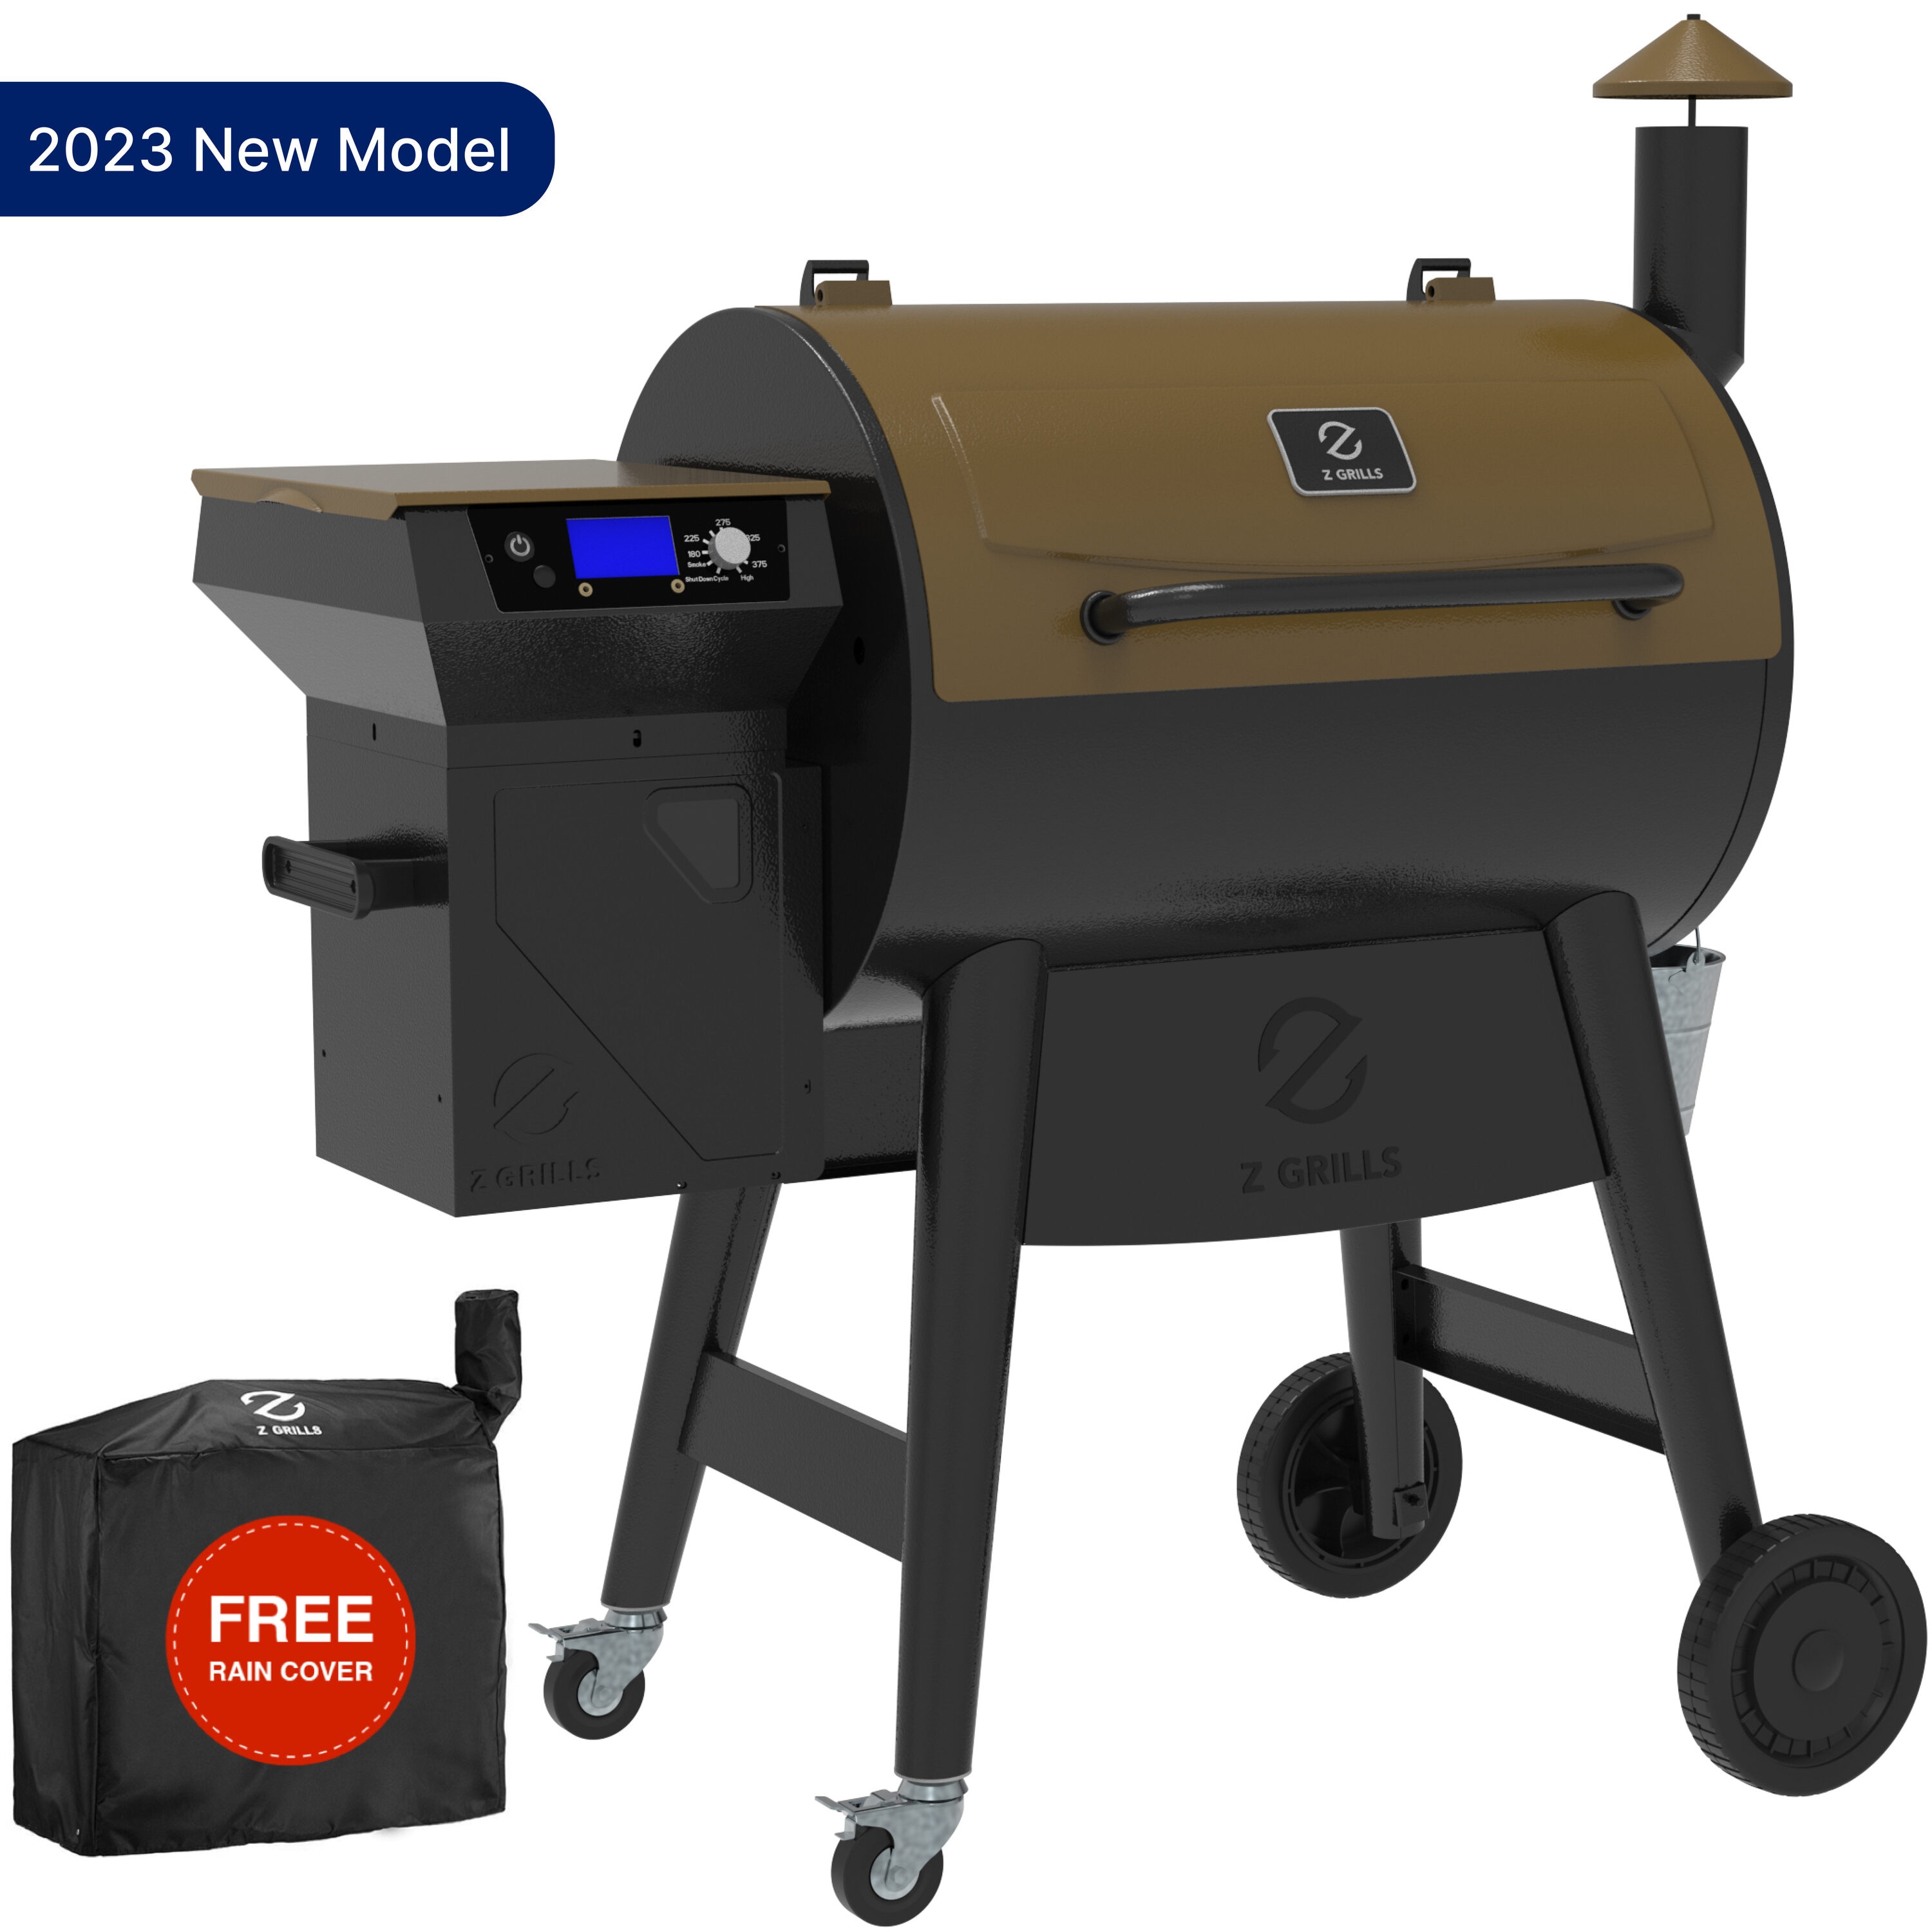 Z Grills Zpg-550b 7-in-1 Barbecue Wood Fire Pellet Smart Smoke Technology Grill, Black